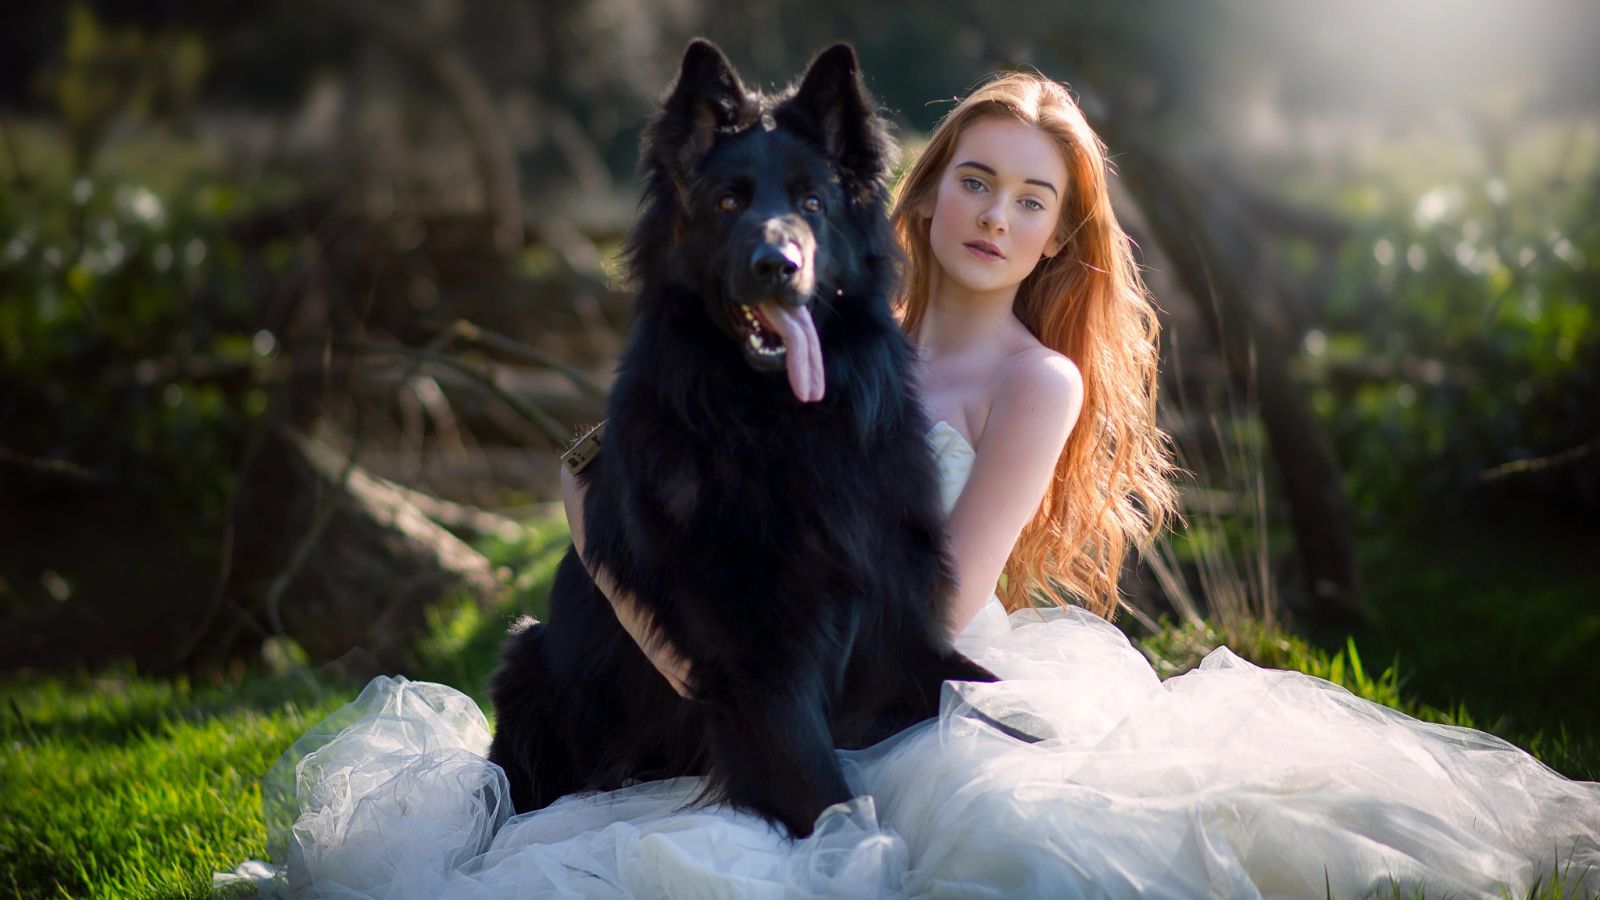 Beautiful bride girl with big black dog Desktop wallpaper 1600x900